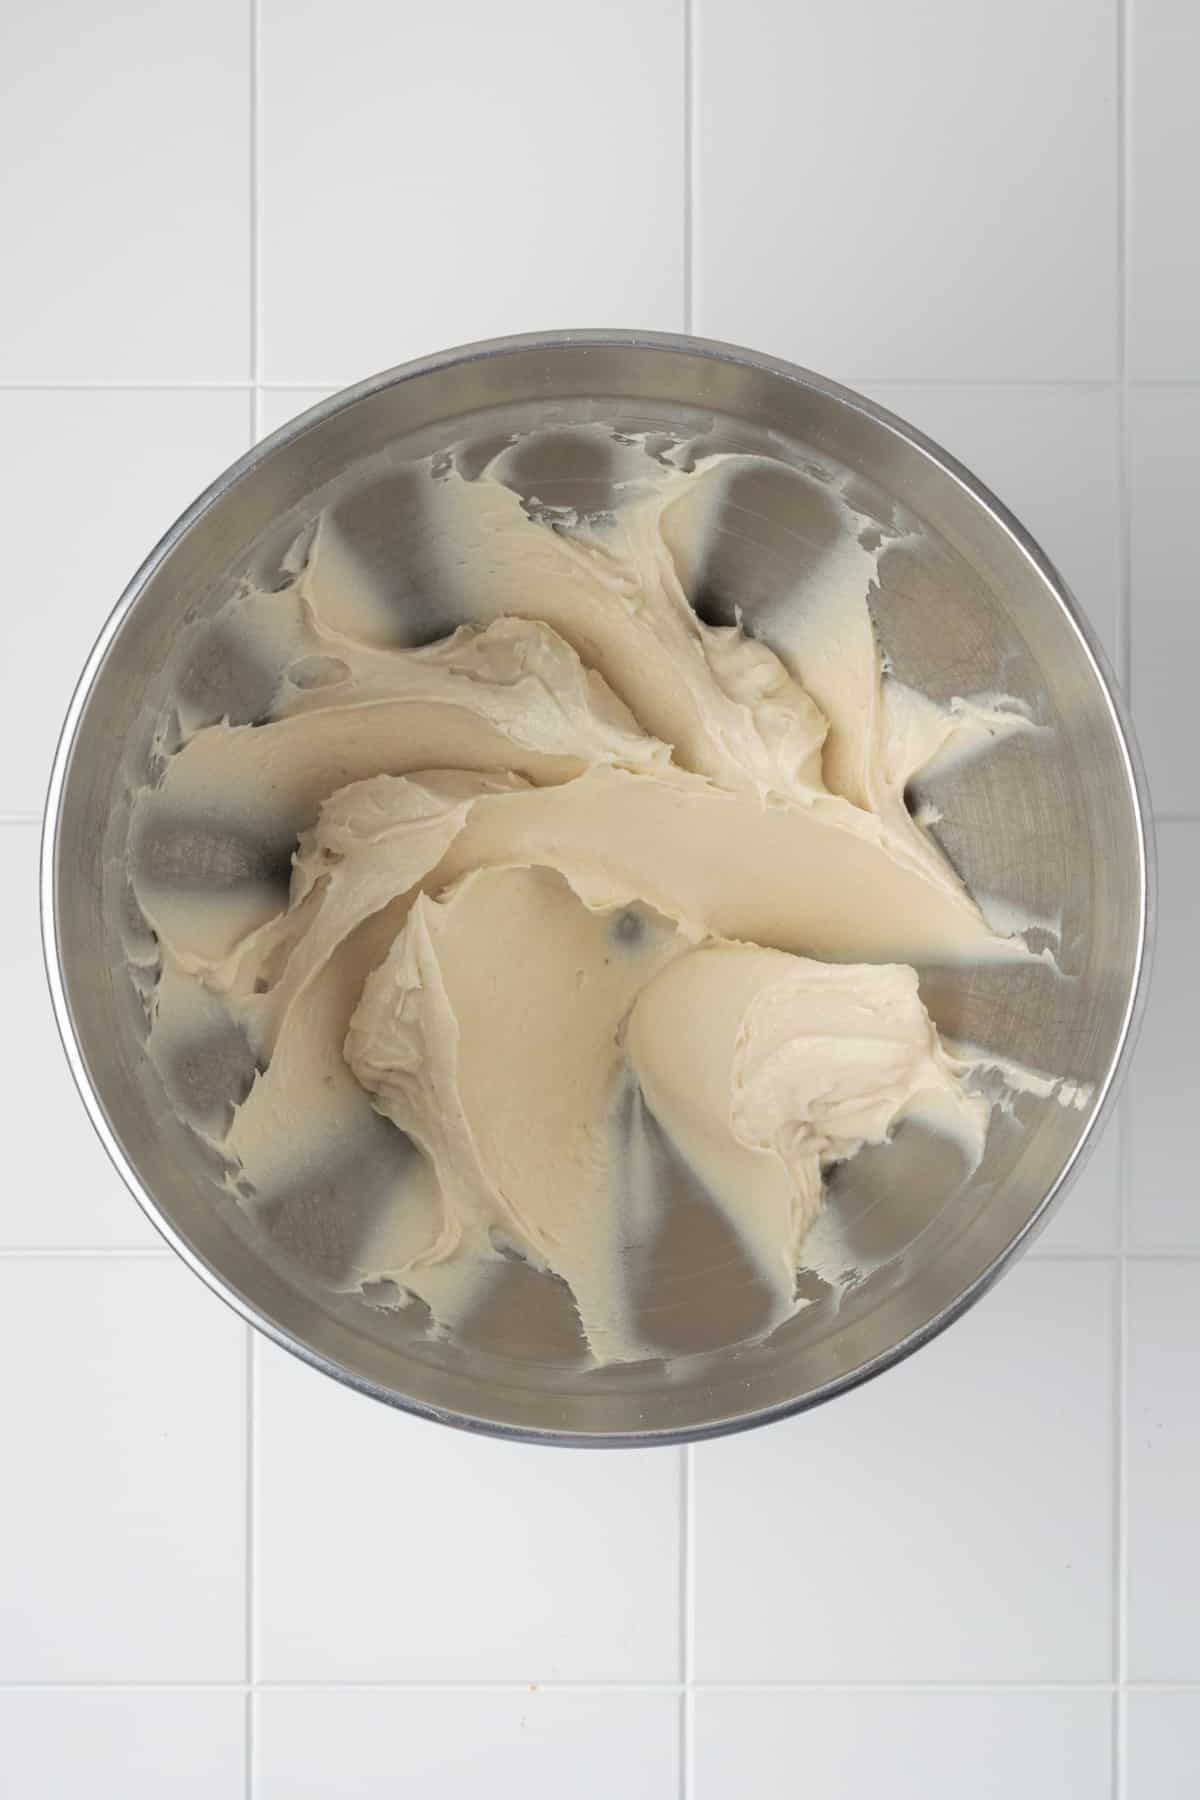 Vegan cream cheese, vegan sour cream, powdered sugar, vanilla, and lemon juice beaten together in a metal mixing bowl.